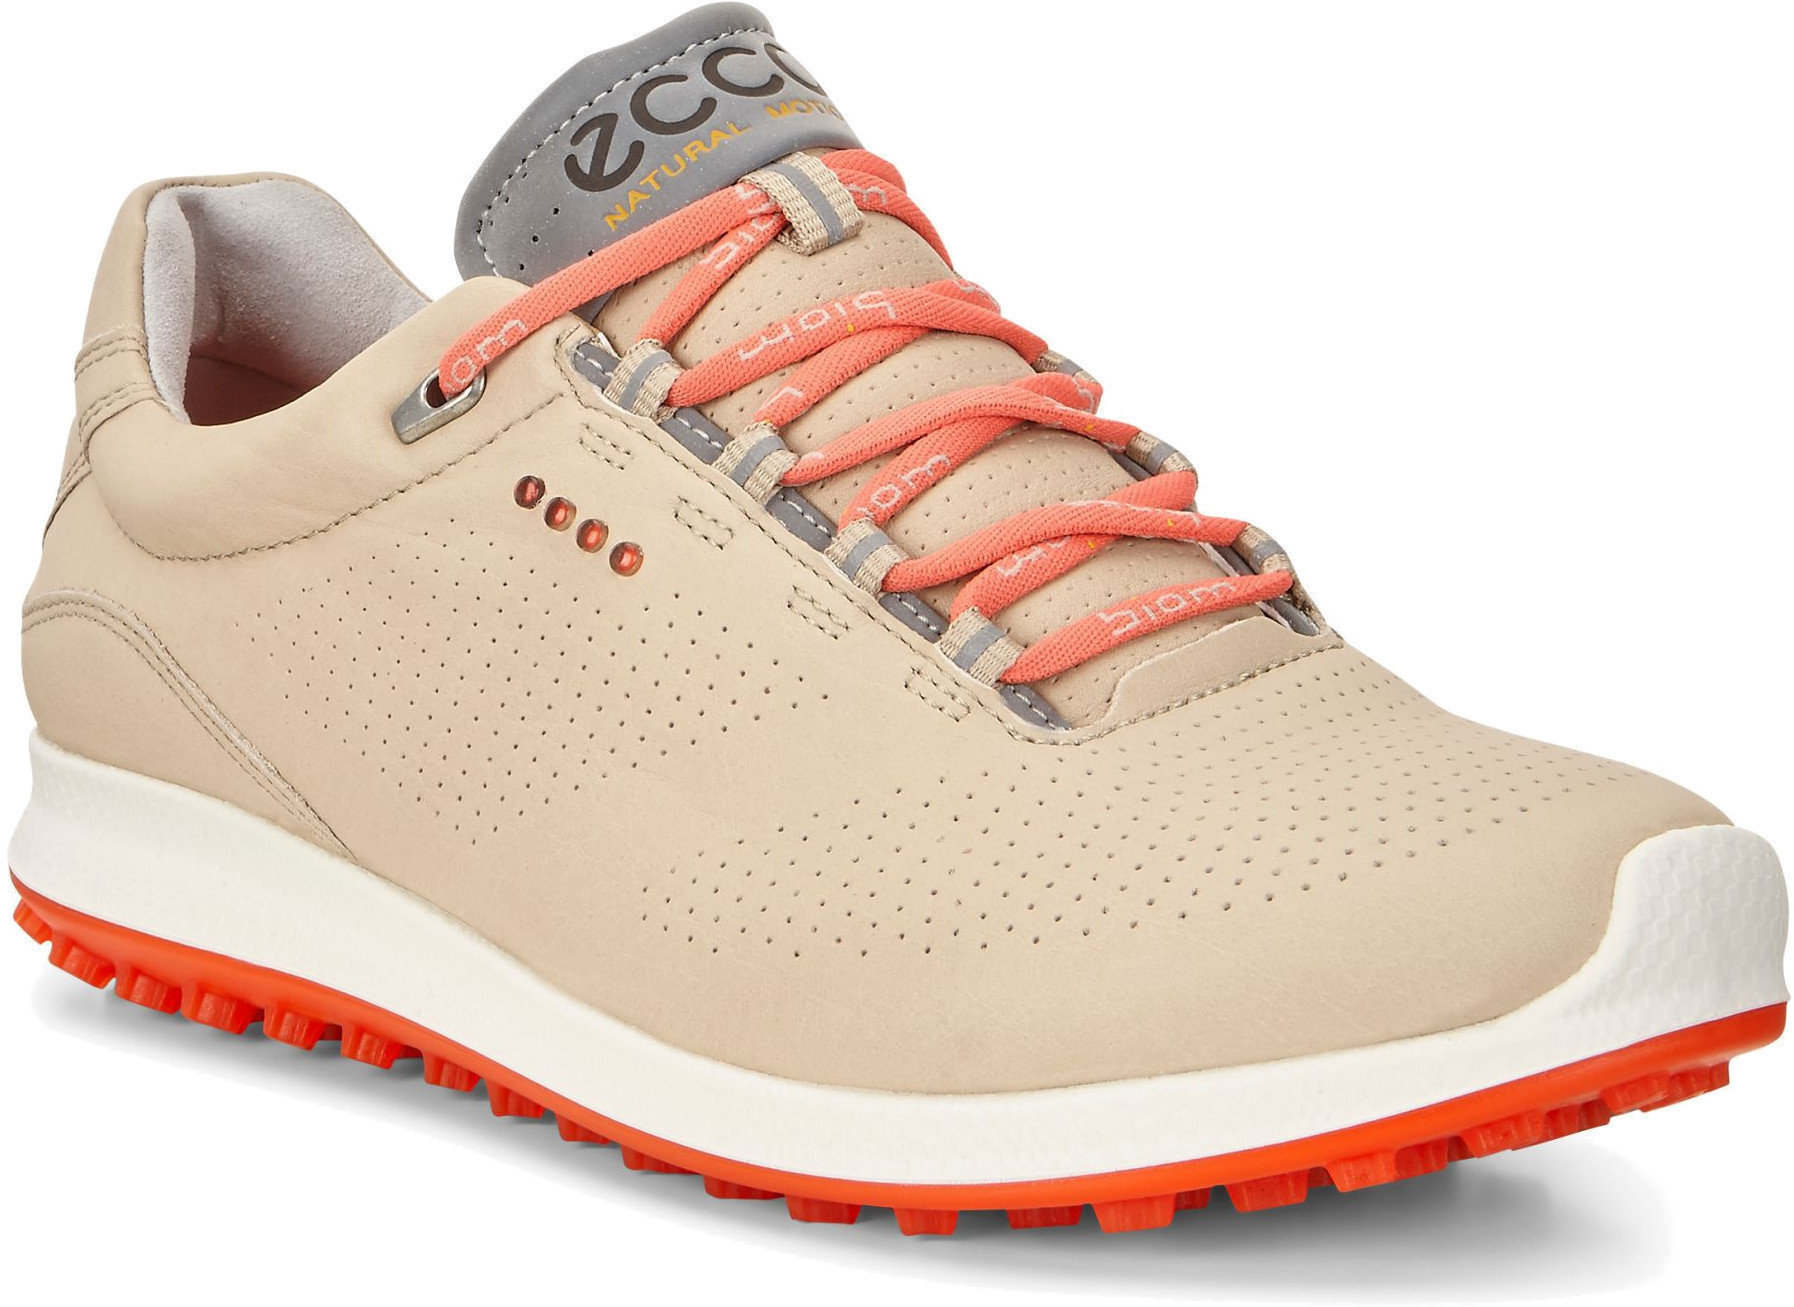 Chaussures de golf pour femmes Ecco Biom Hybrid 2 Chaussures de Golf Femmes Oyester/Coral Blush 40